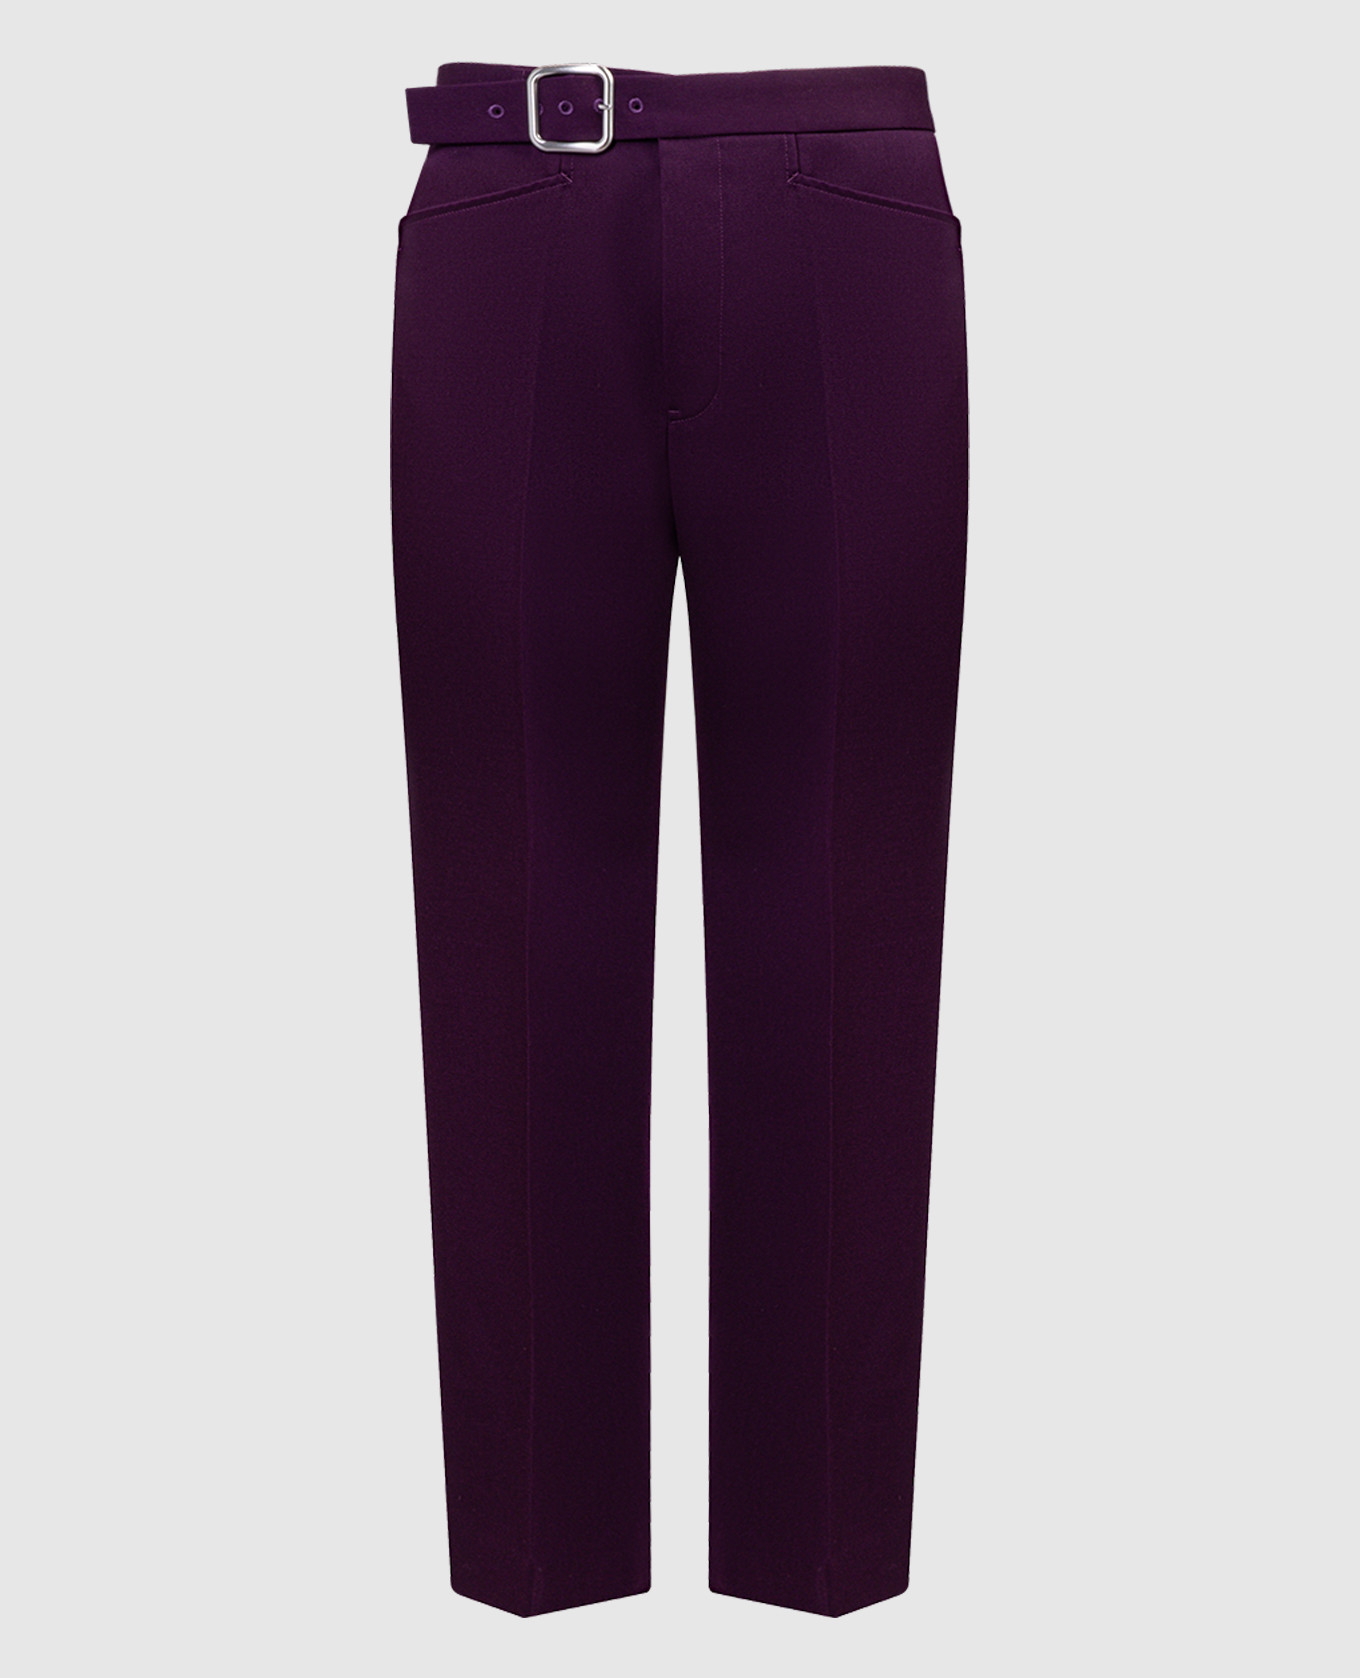 Purple short pants made of wool